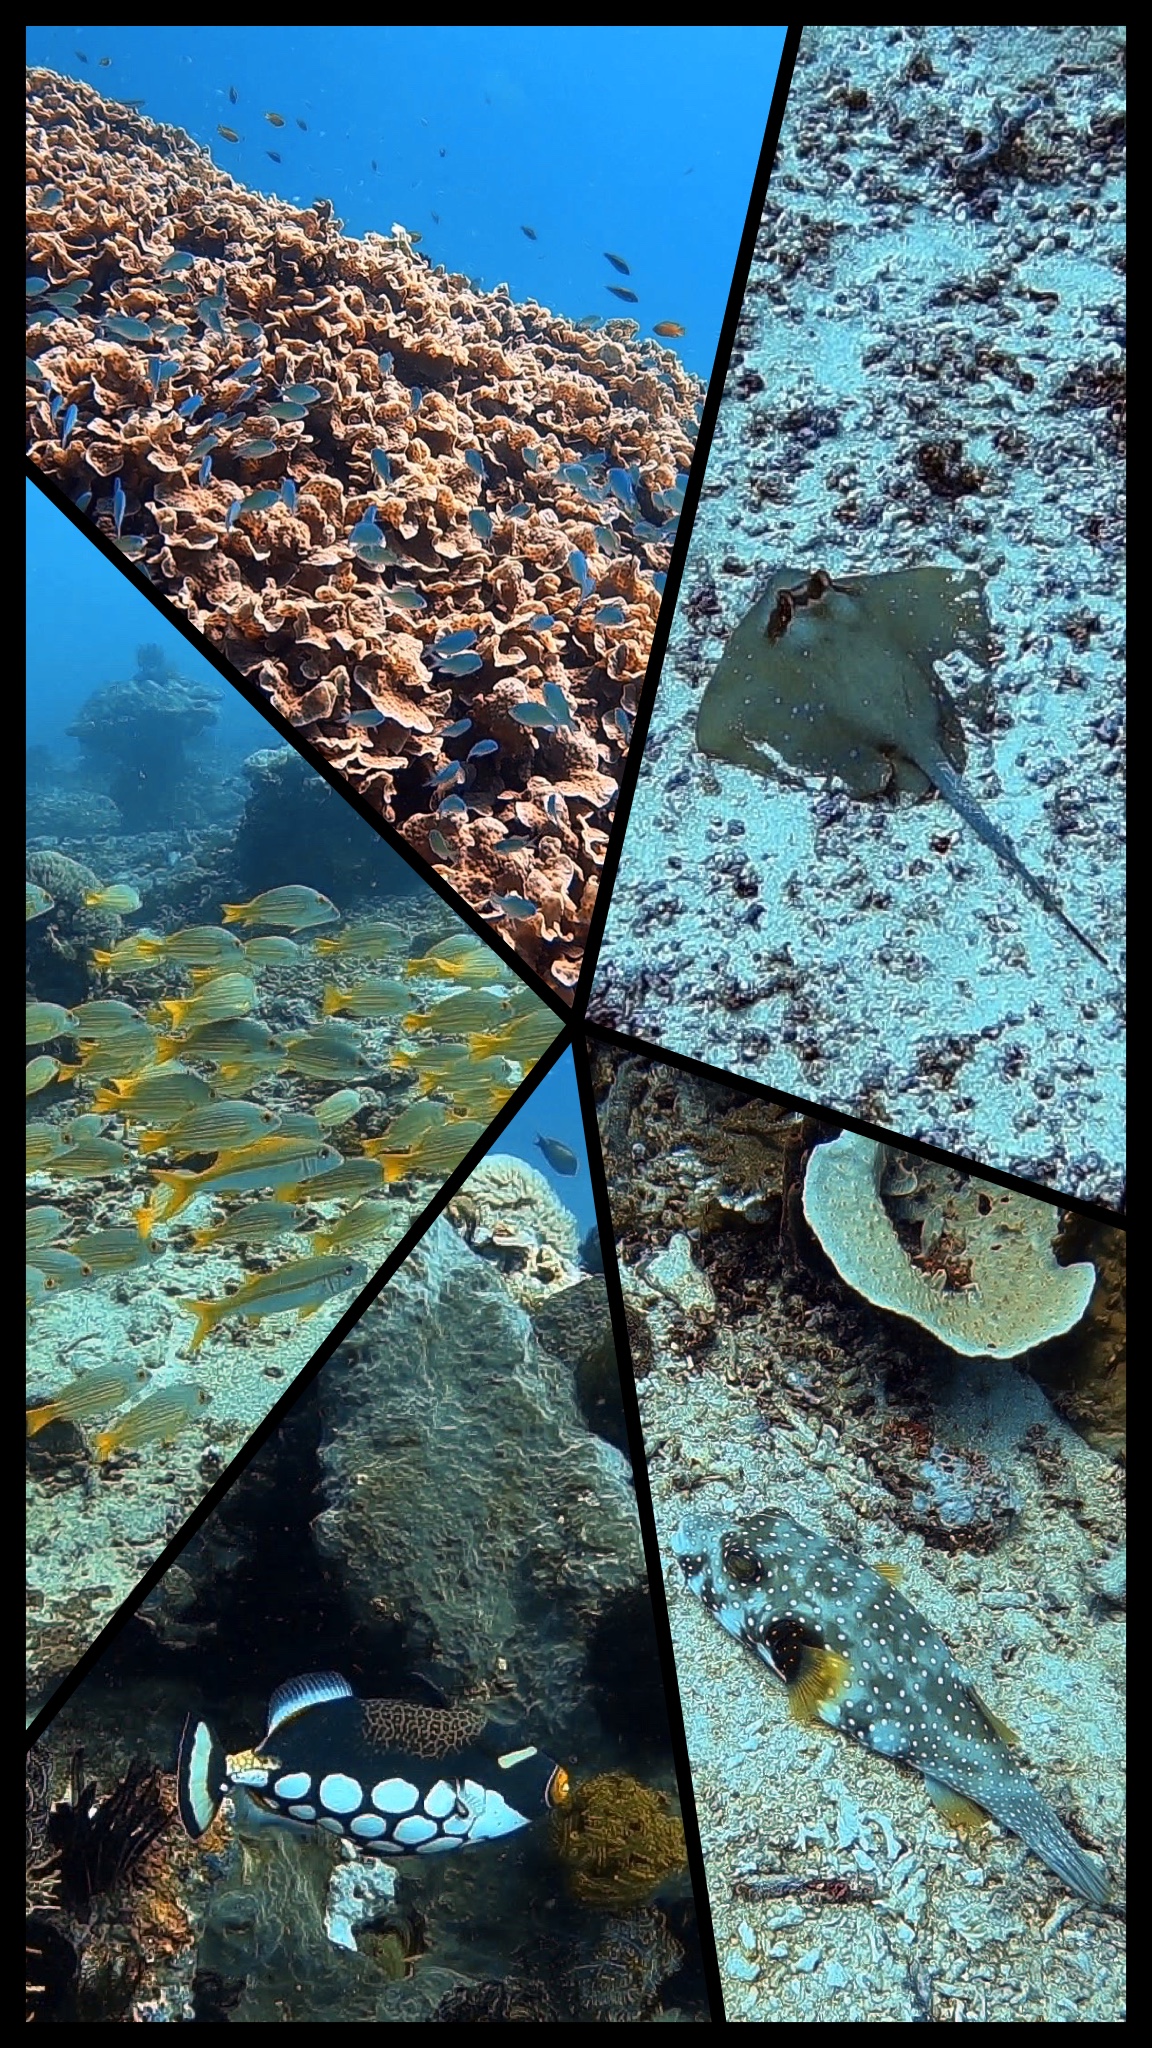 Amazing underwater world!